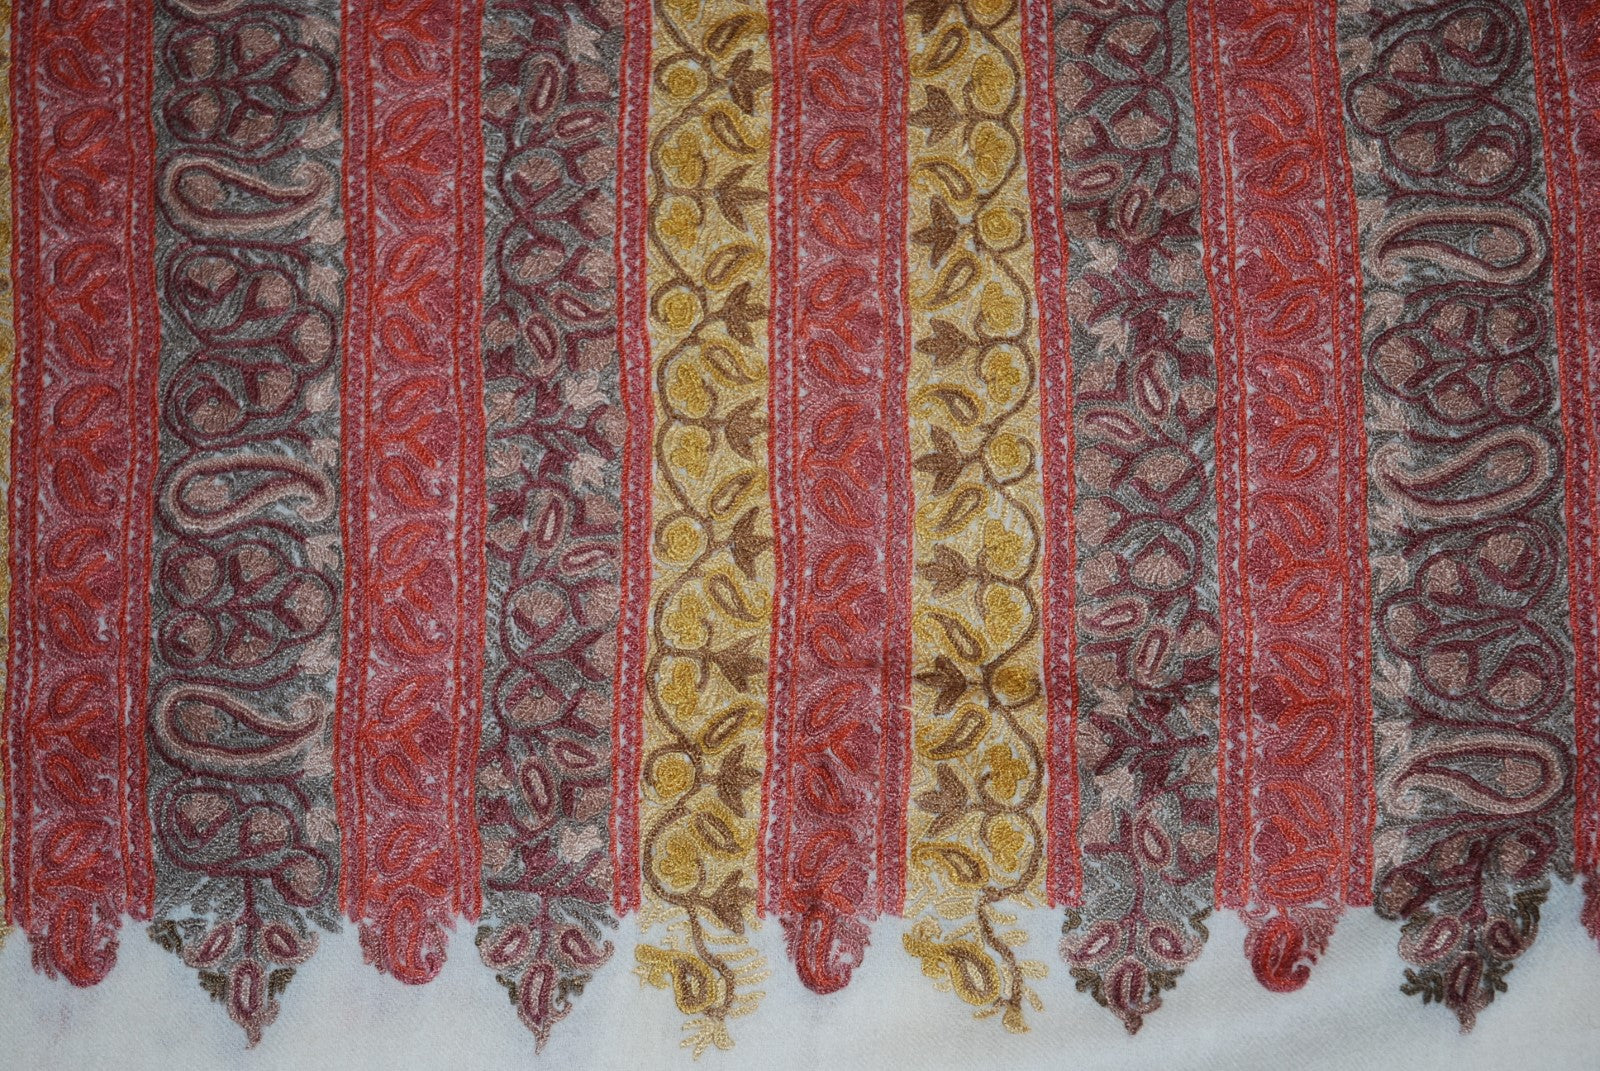 Kashmir Woolen Shawl Wrap Throw Off White, Multicolor "Jamawar" Embroidery #WS-112